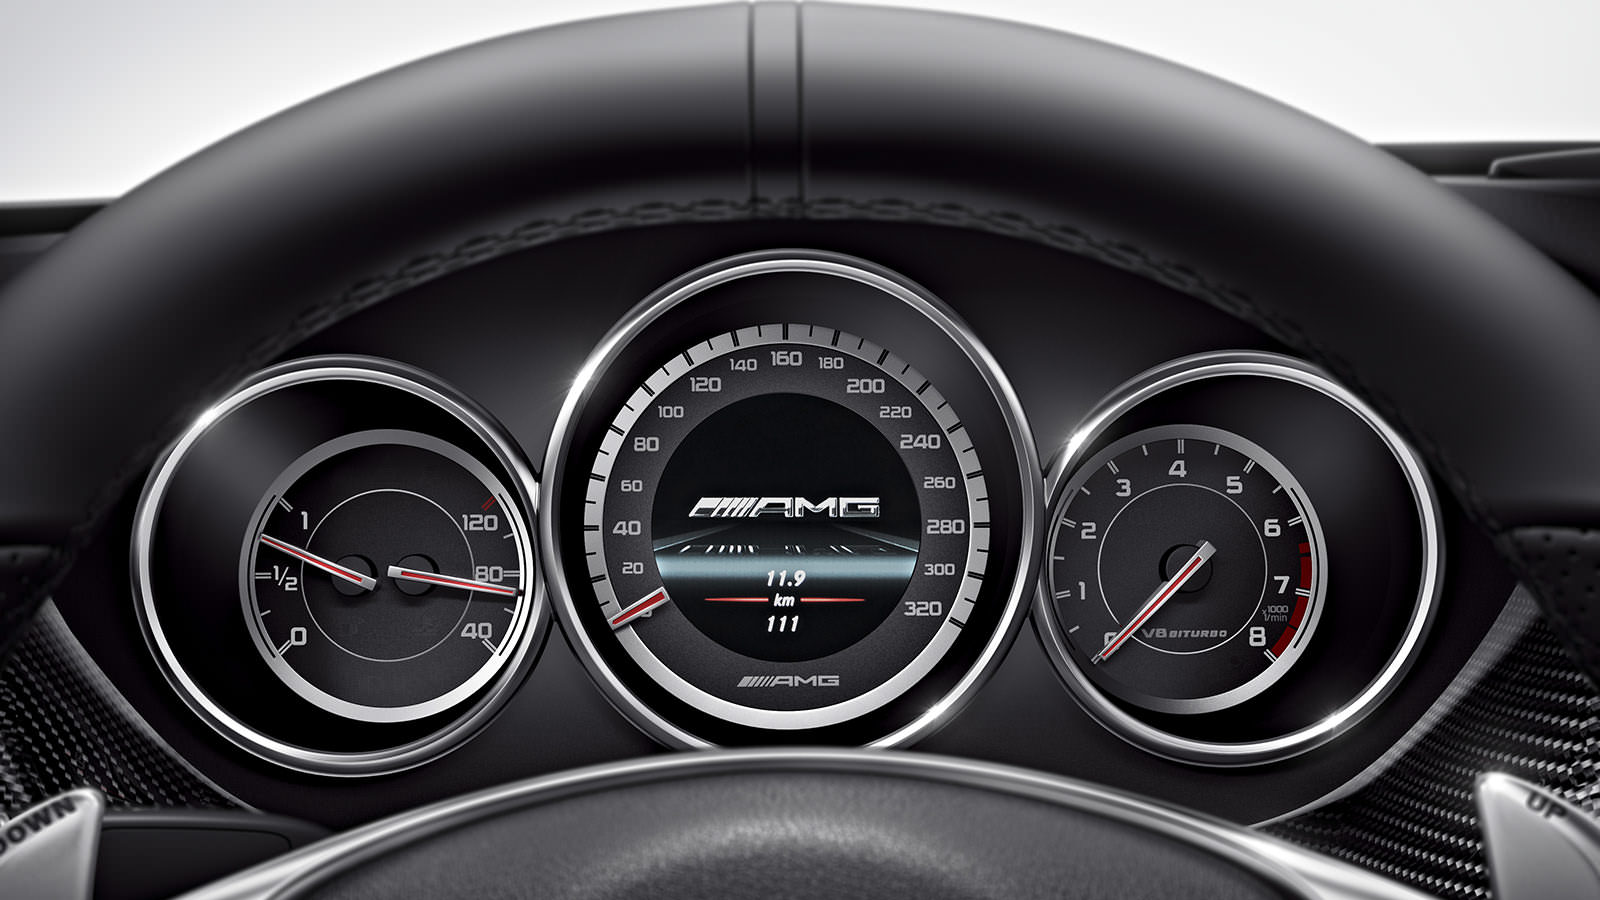 Mercedes Benz AMG CLS 63 speedometer view